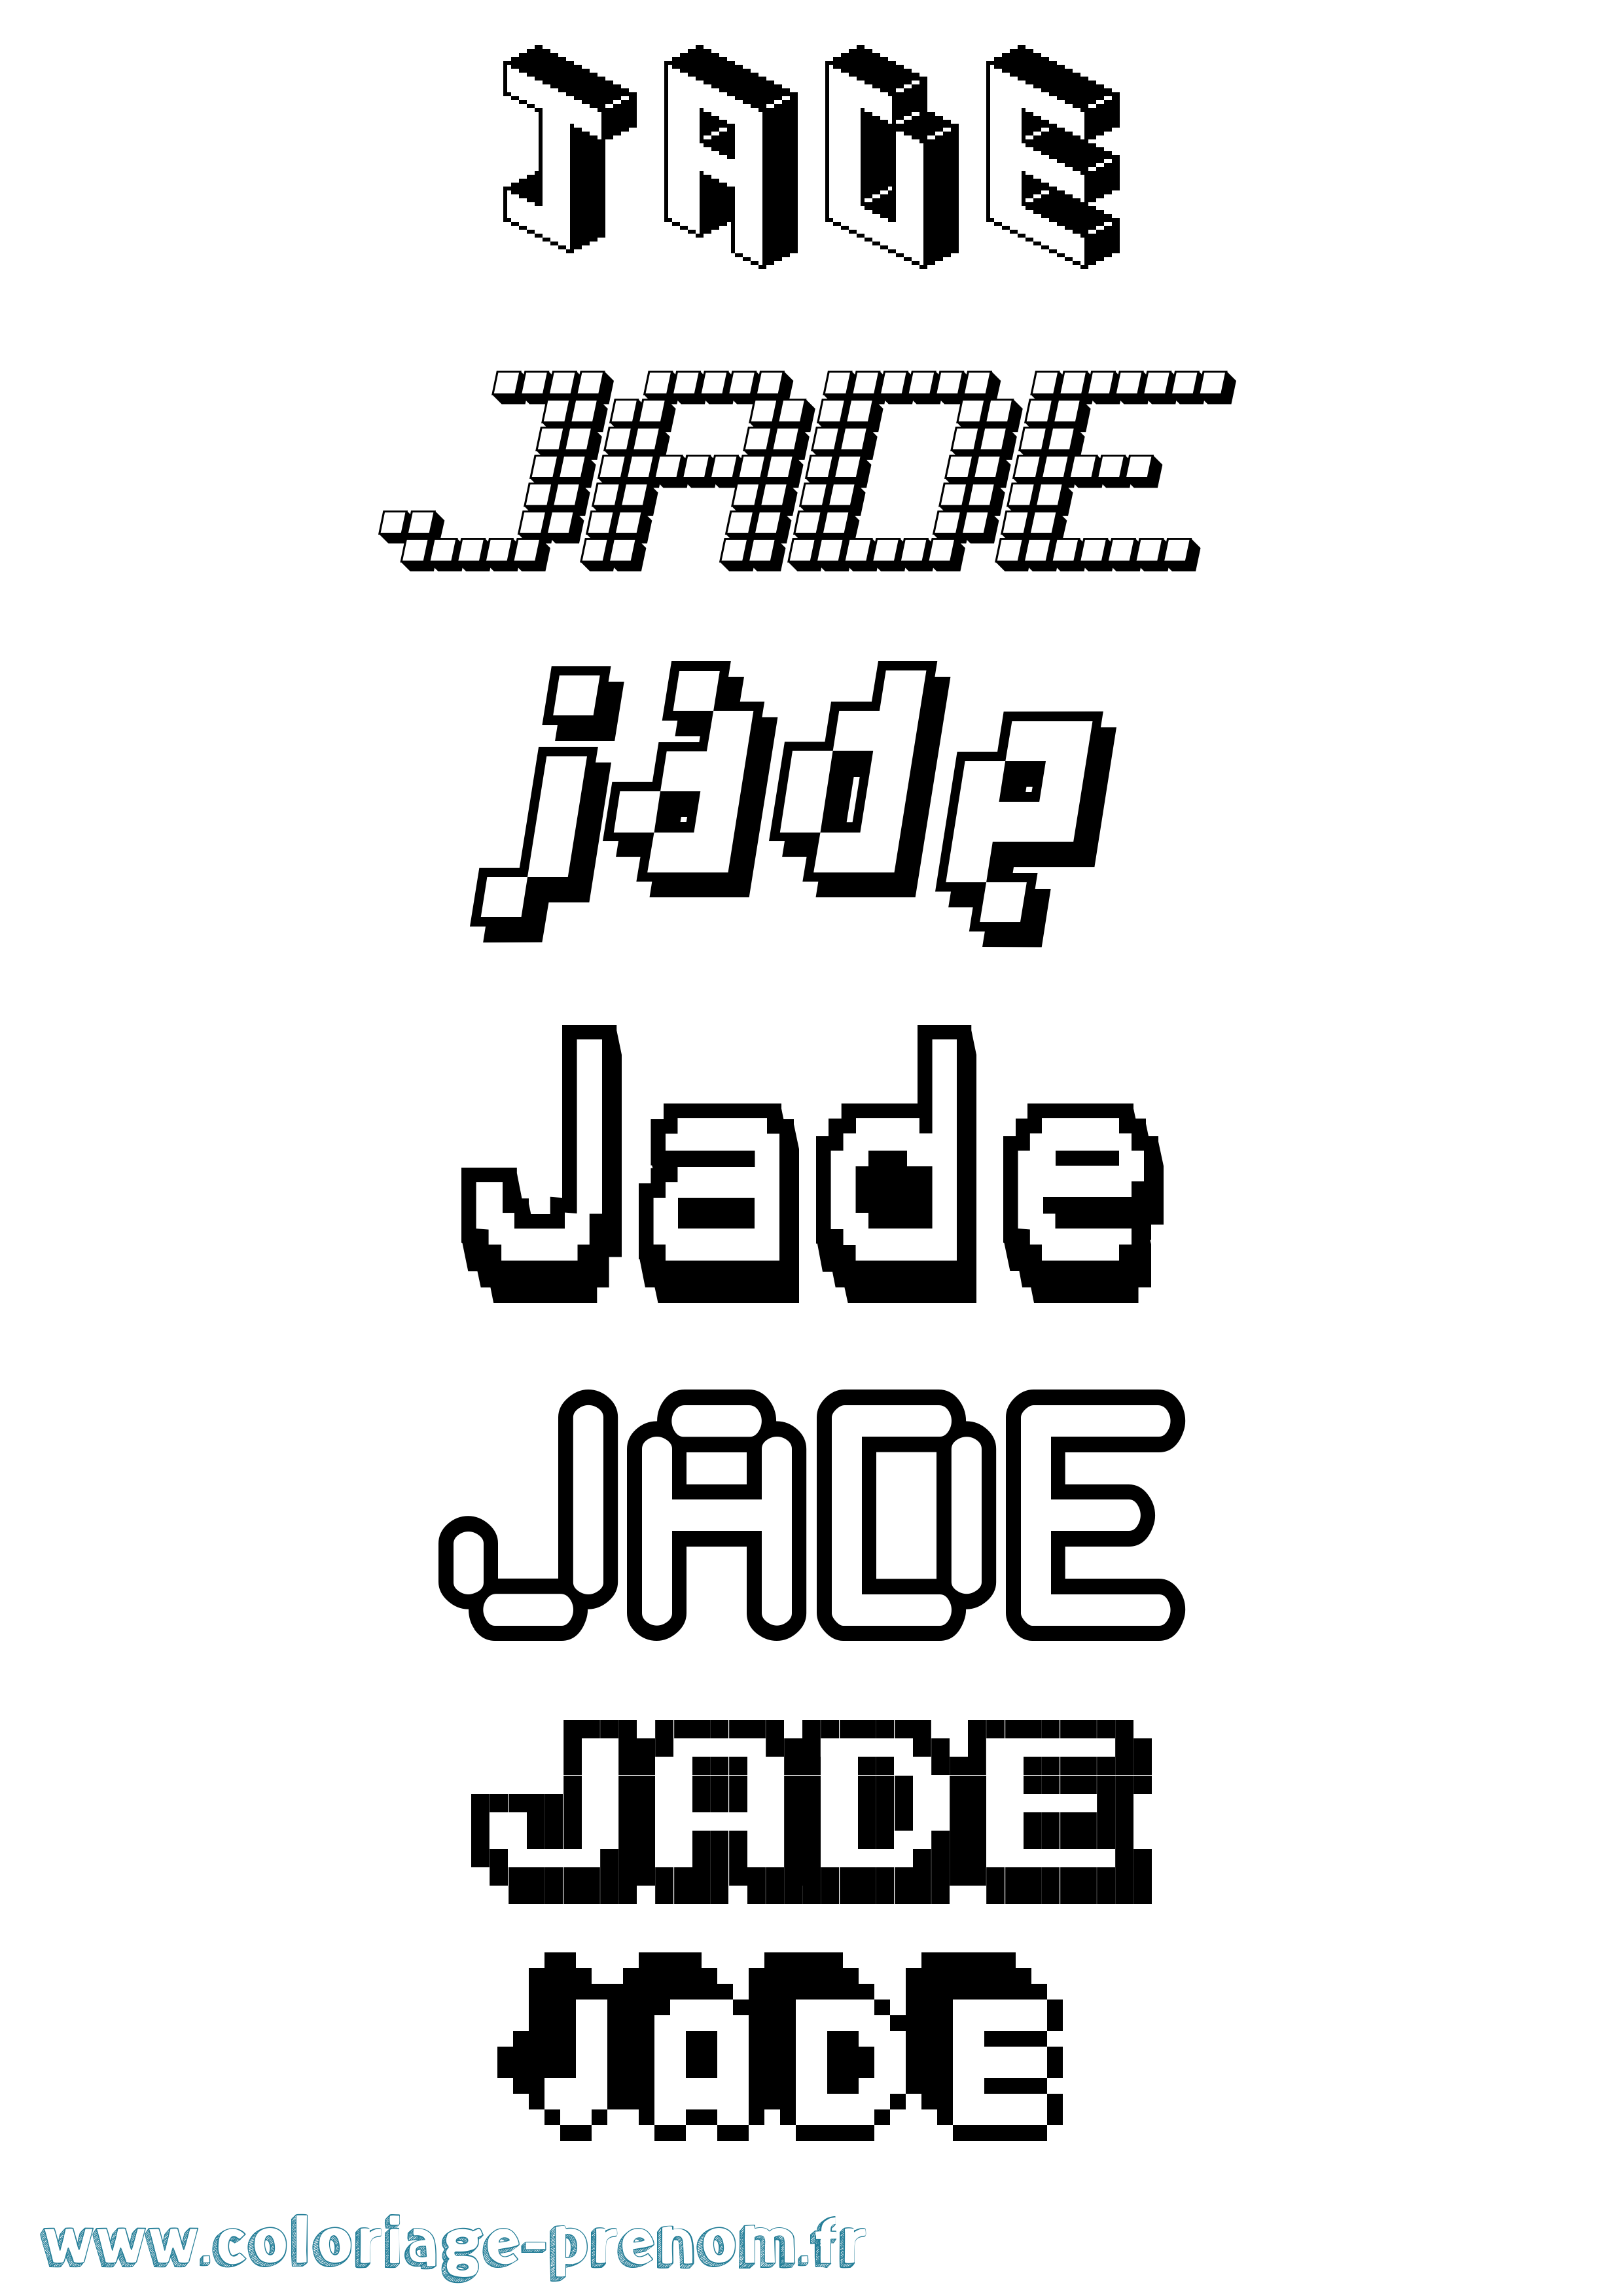 Coloriage prénom Jade Pixel